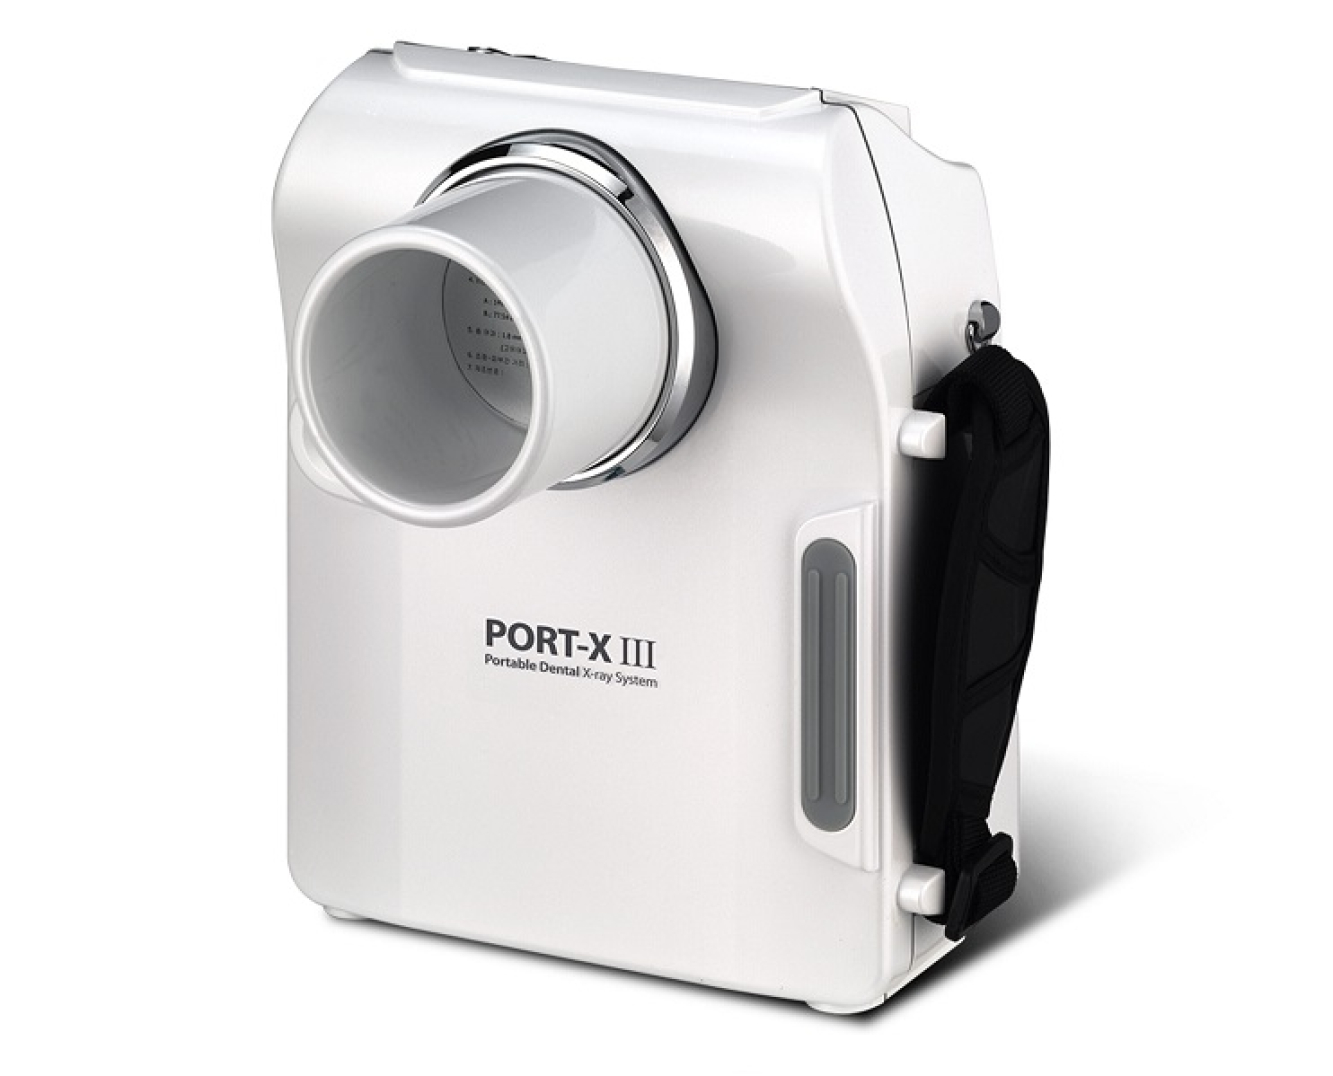 PORT-X III (PORT-X II NEW) Портативный рентгеновский аппарат для стоматологии, диагностический, Genoray Co.,Ltd (Ю.Корея)